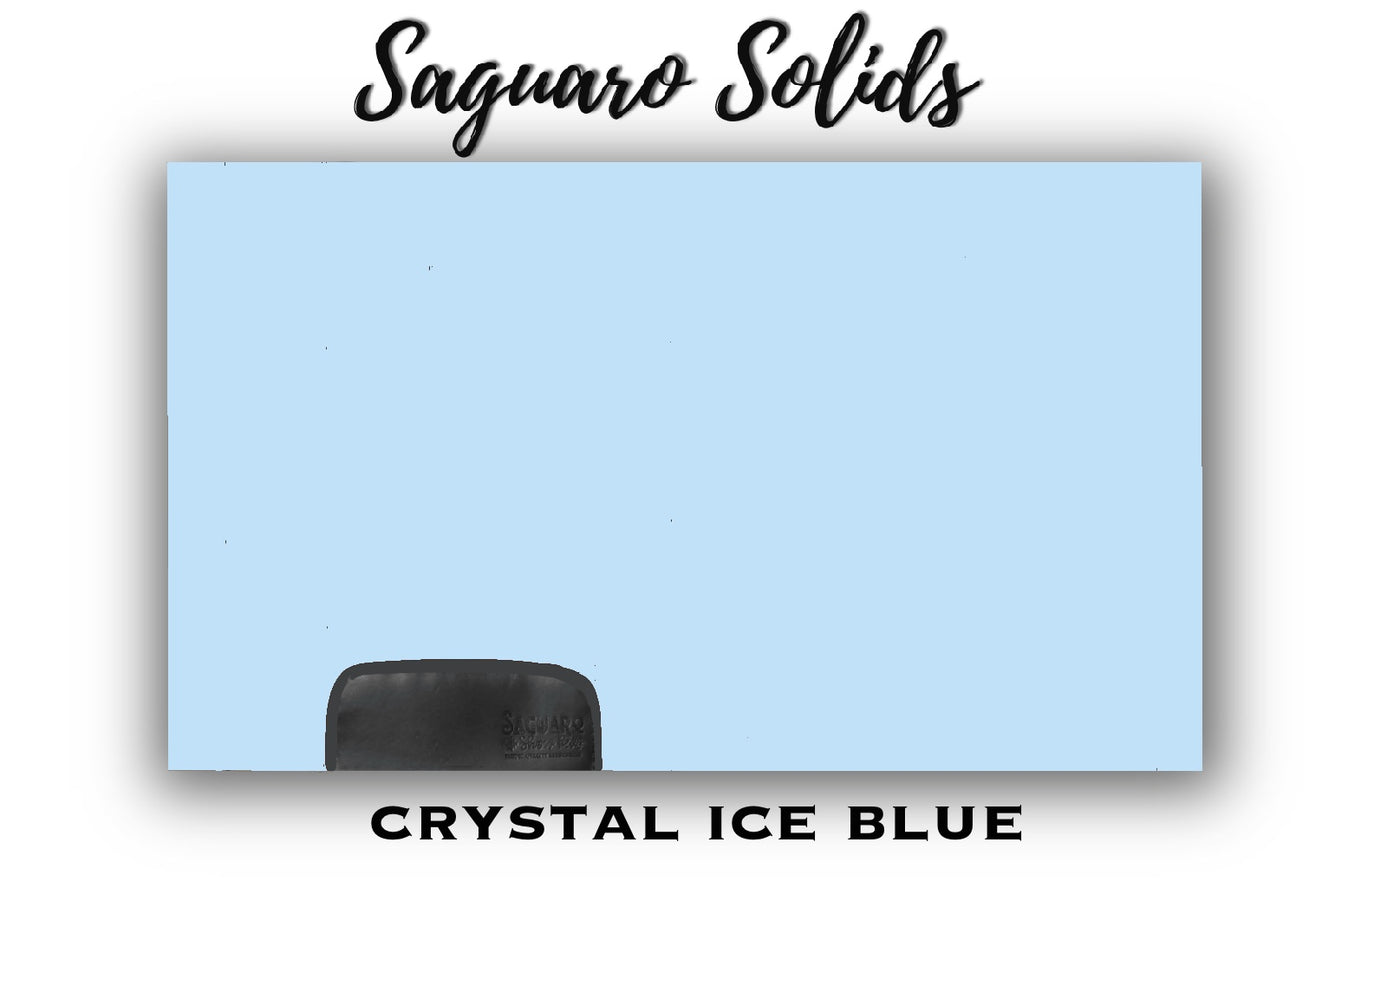 Saguaro Solid "Crystal Ice Blue" Show Pad (SEMI-CUSTOM)